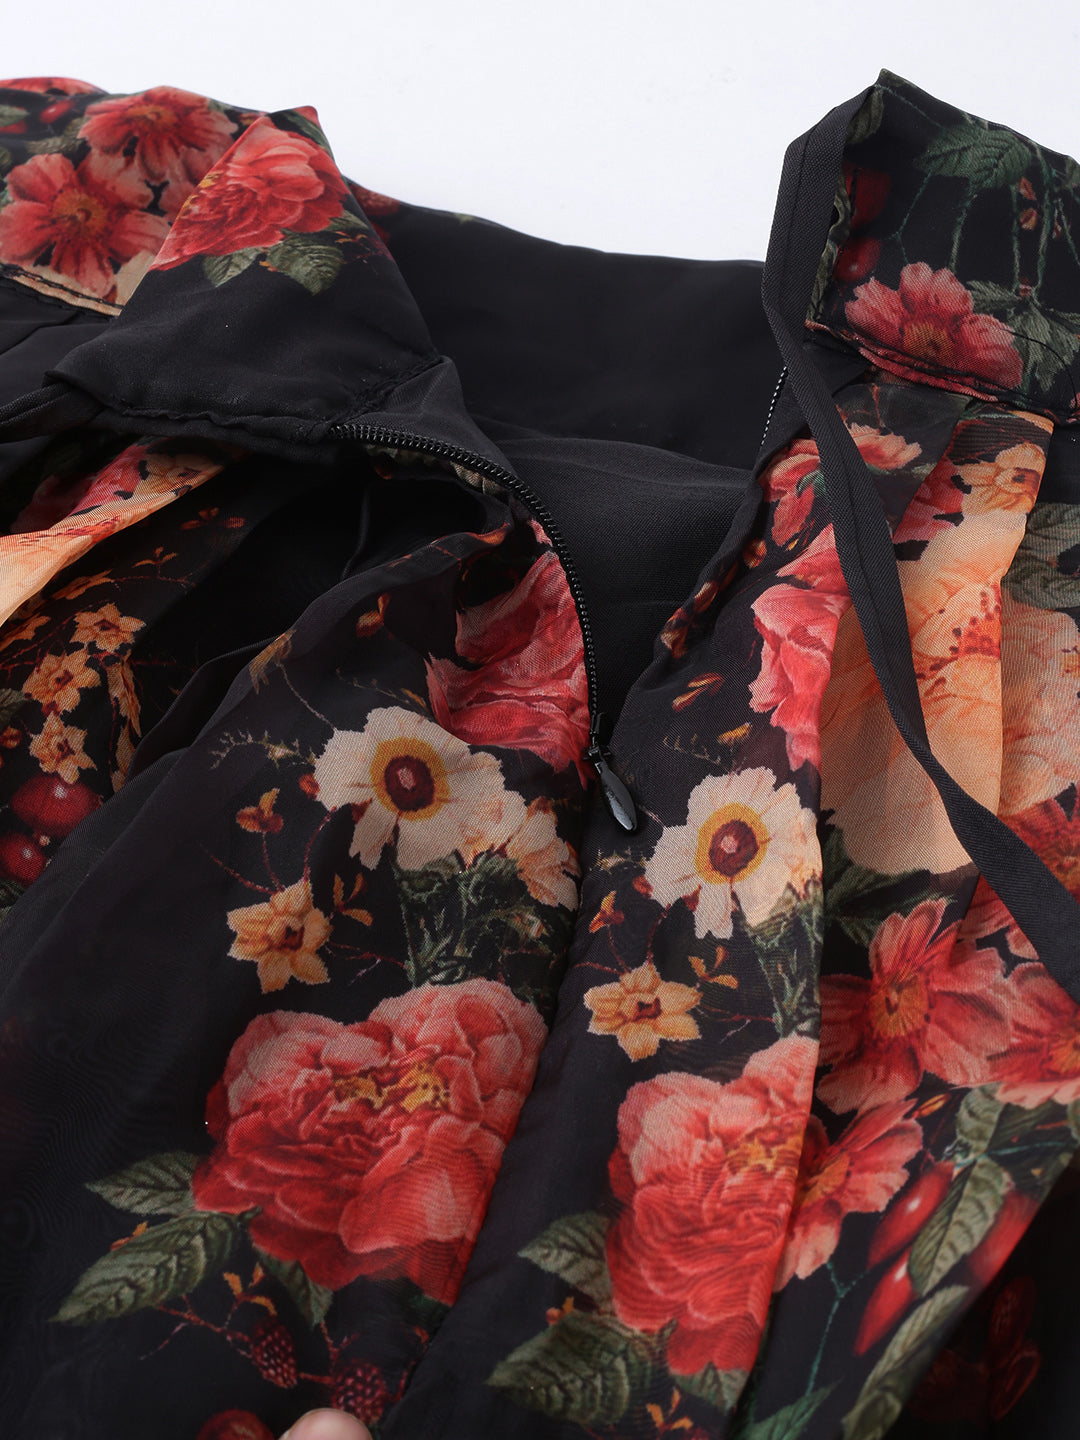 Women's Black Floral Print Organza Fully-Stitched Lehenga - Royal Dwells